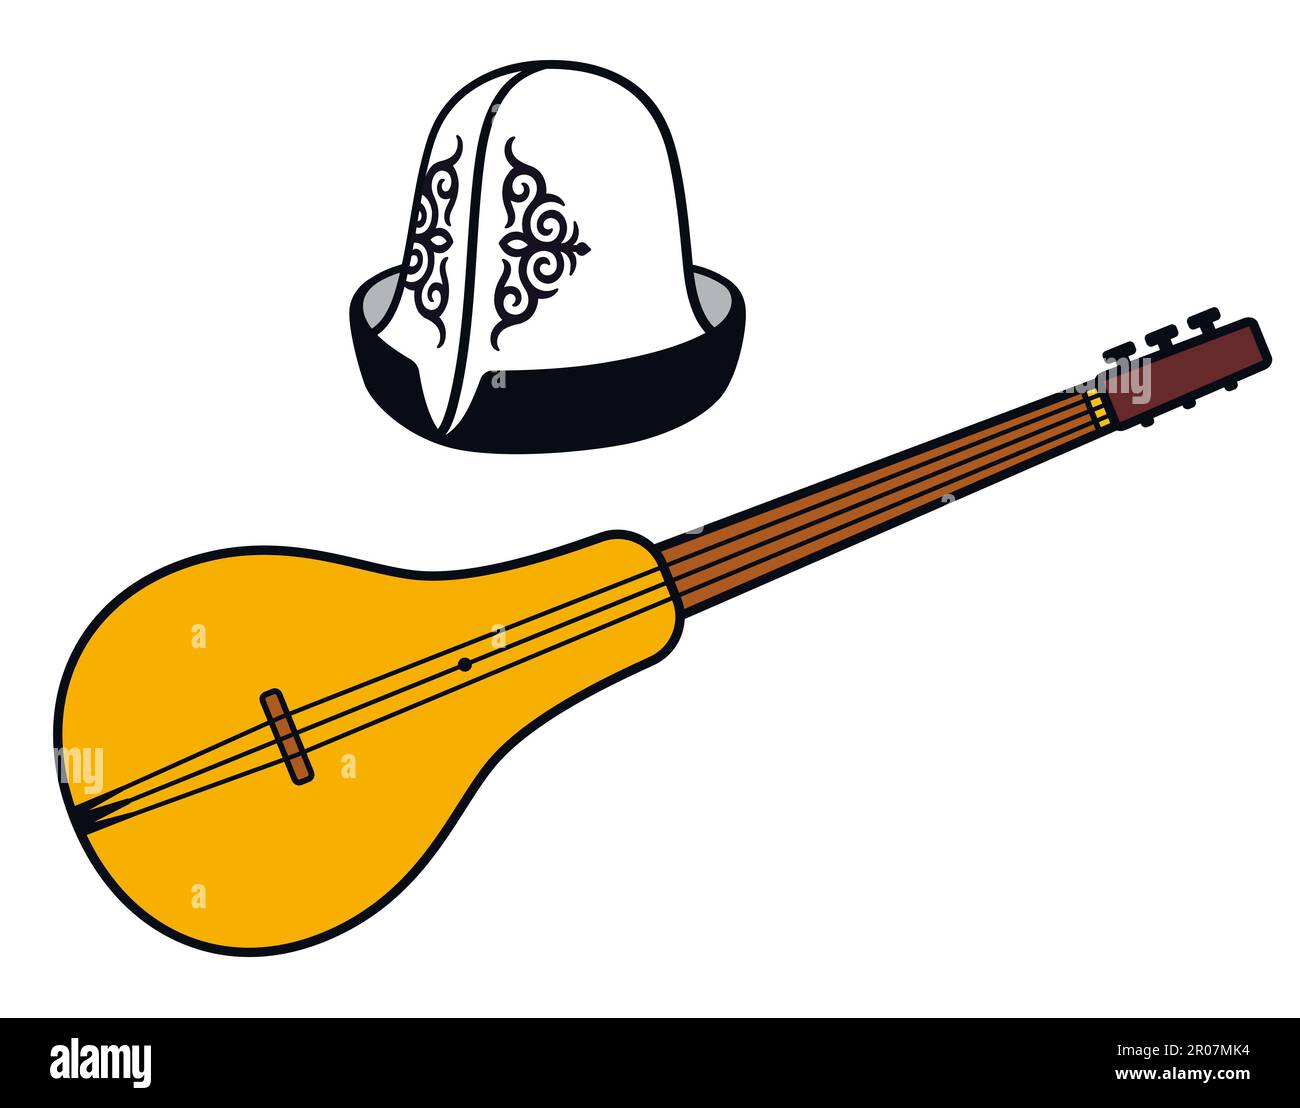 Traditioneller kirgisischer Hut (AK Kalpak) und Musikinstrument (Komuz). Nomadische Volkskultur. Cartoon-Vektor-Clip-Art-Illustration. Stock Vektor